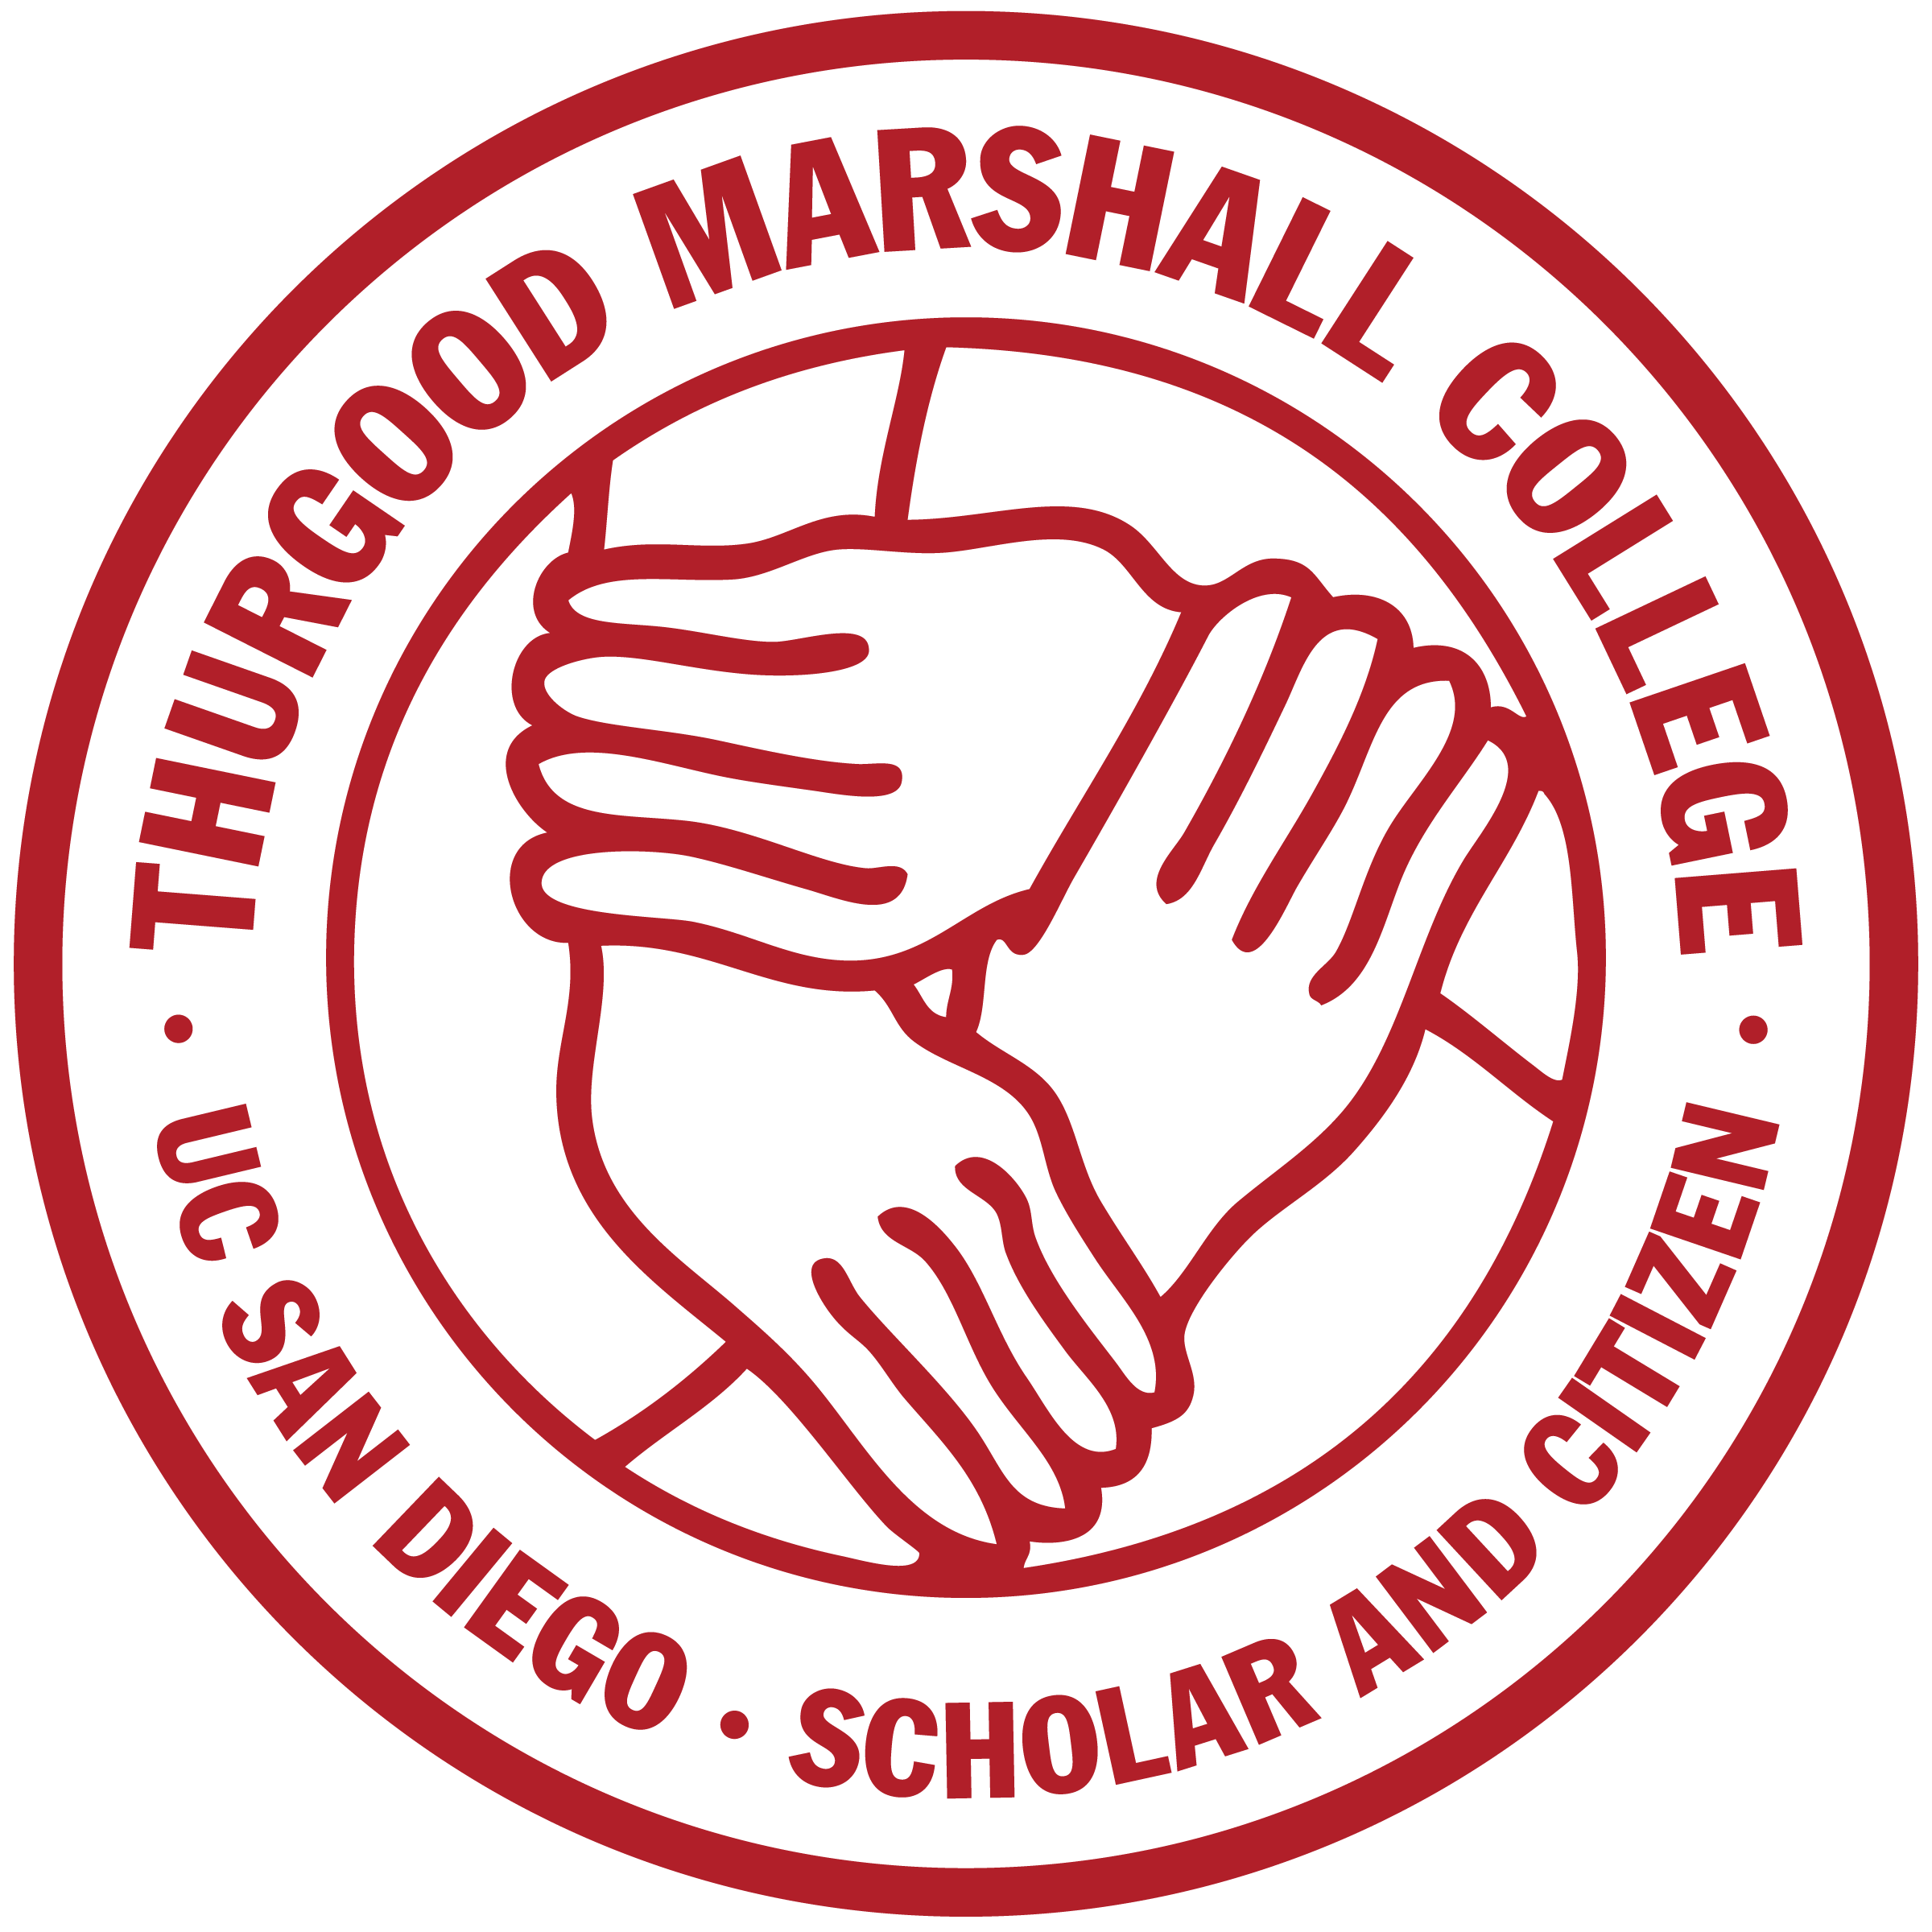 marshall-logo